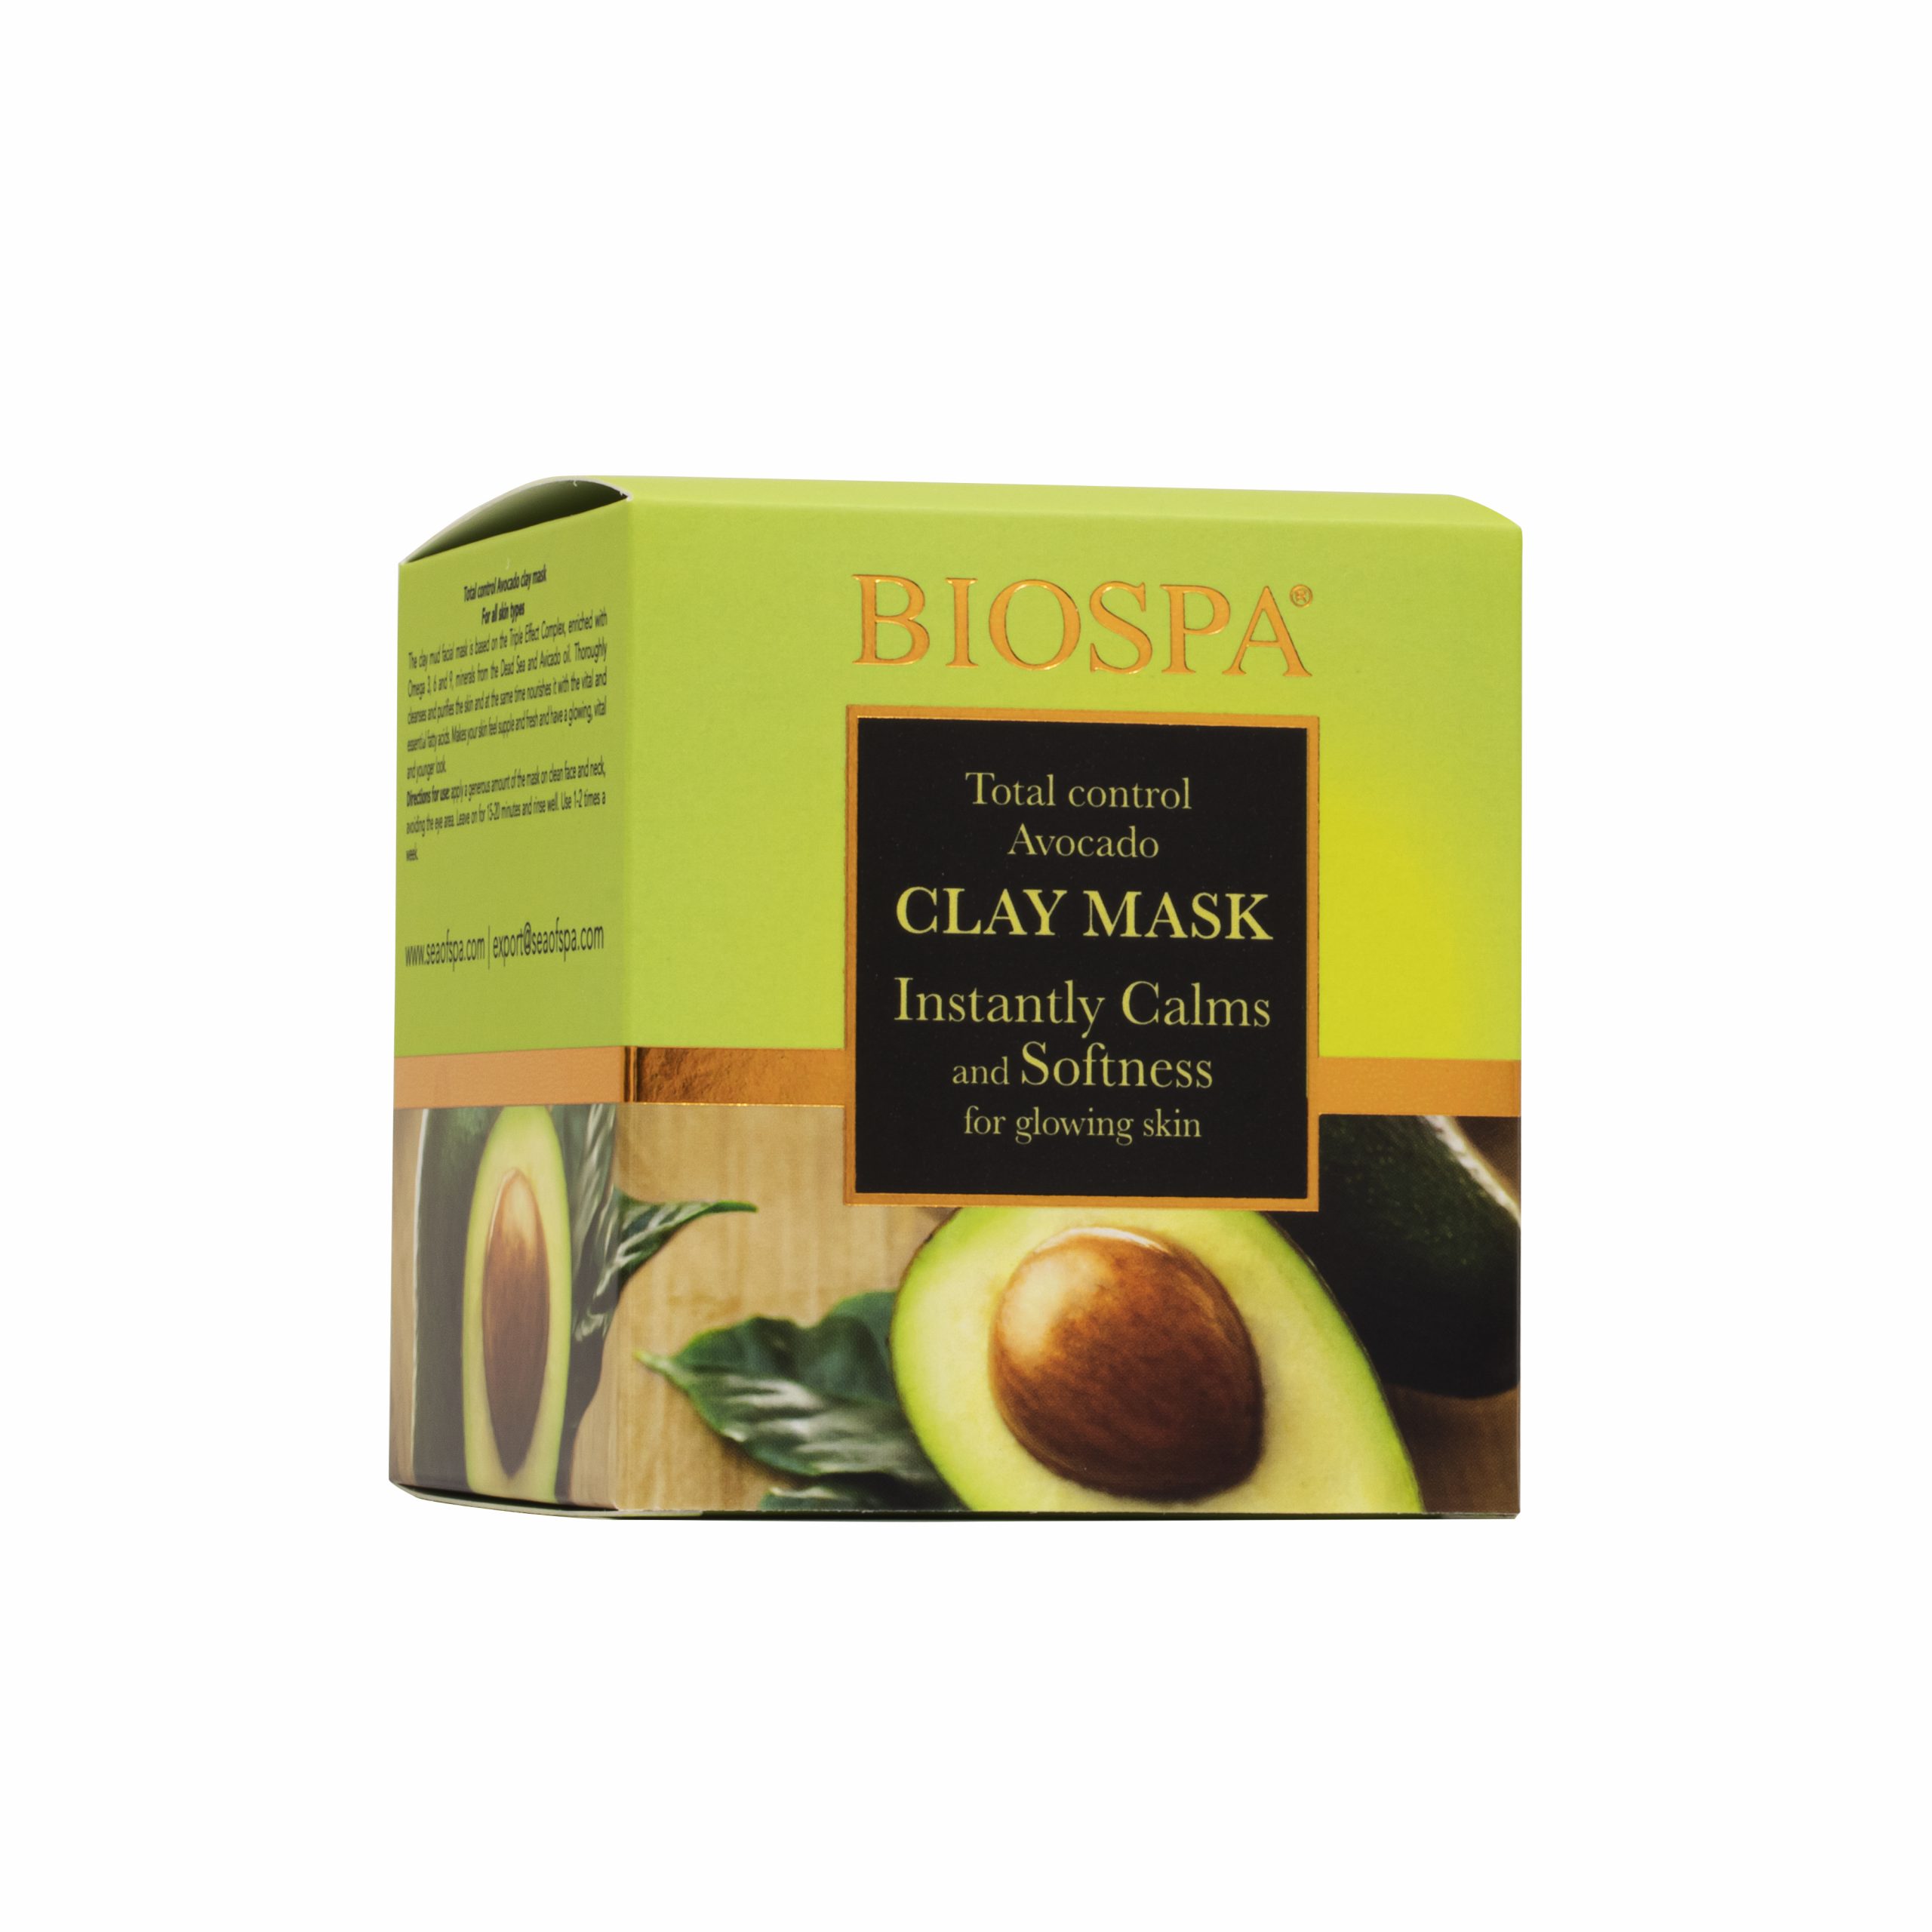 Avocado clay mask 002